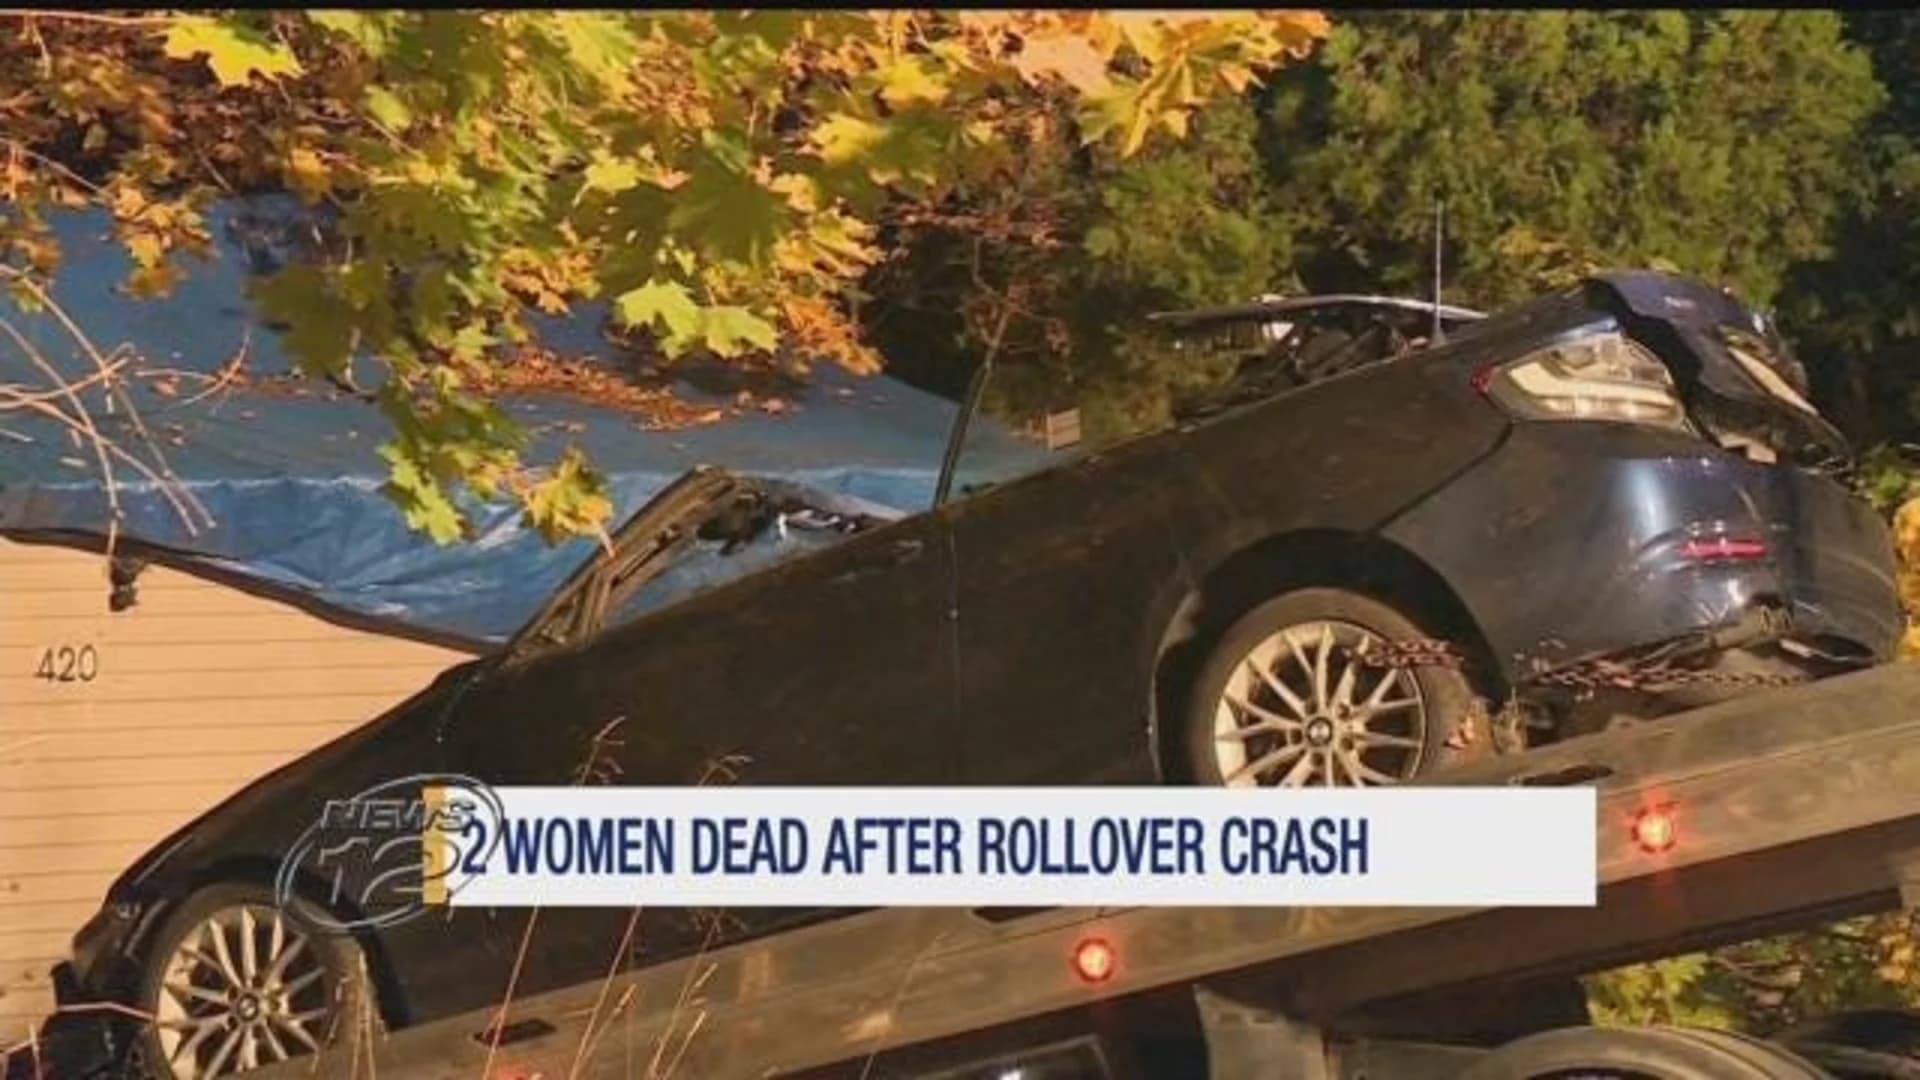 Police identify 2 women in deadly Orange County crash